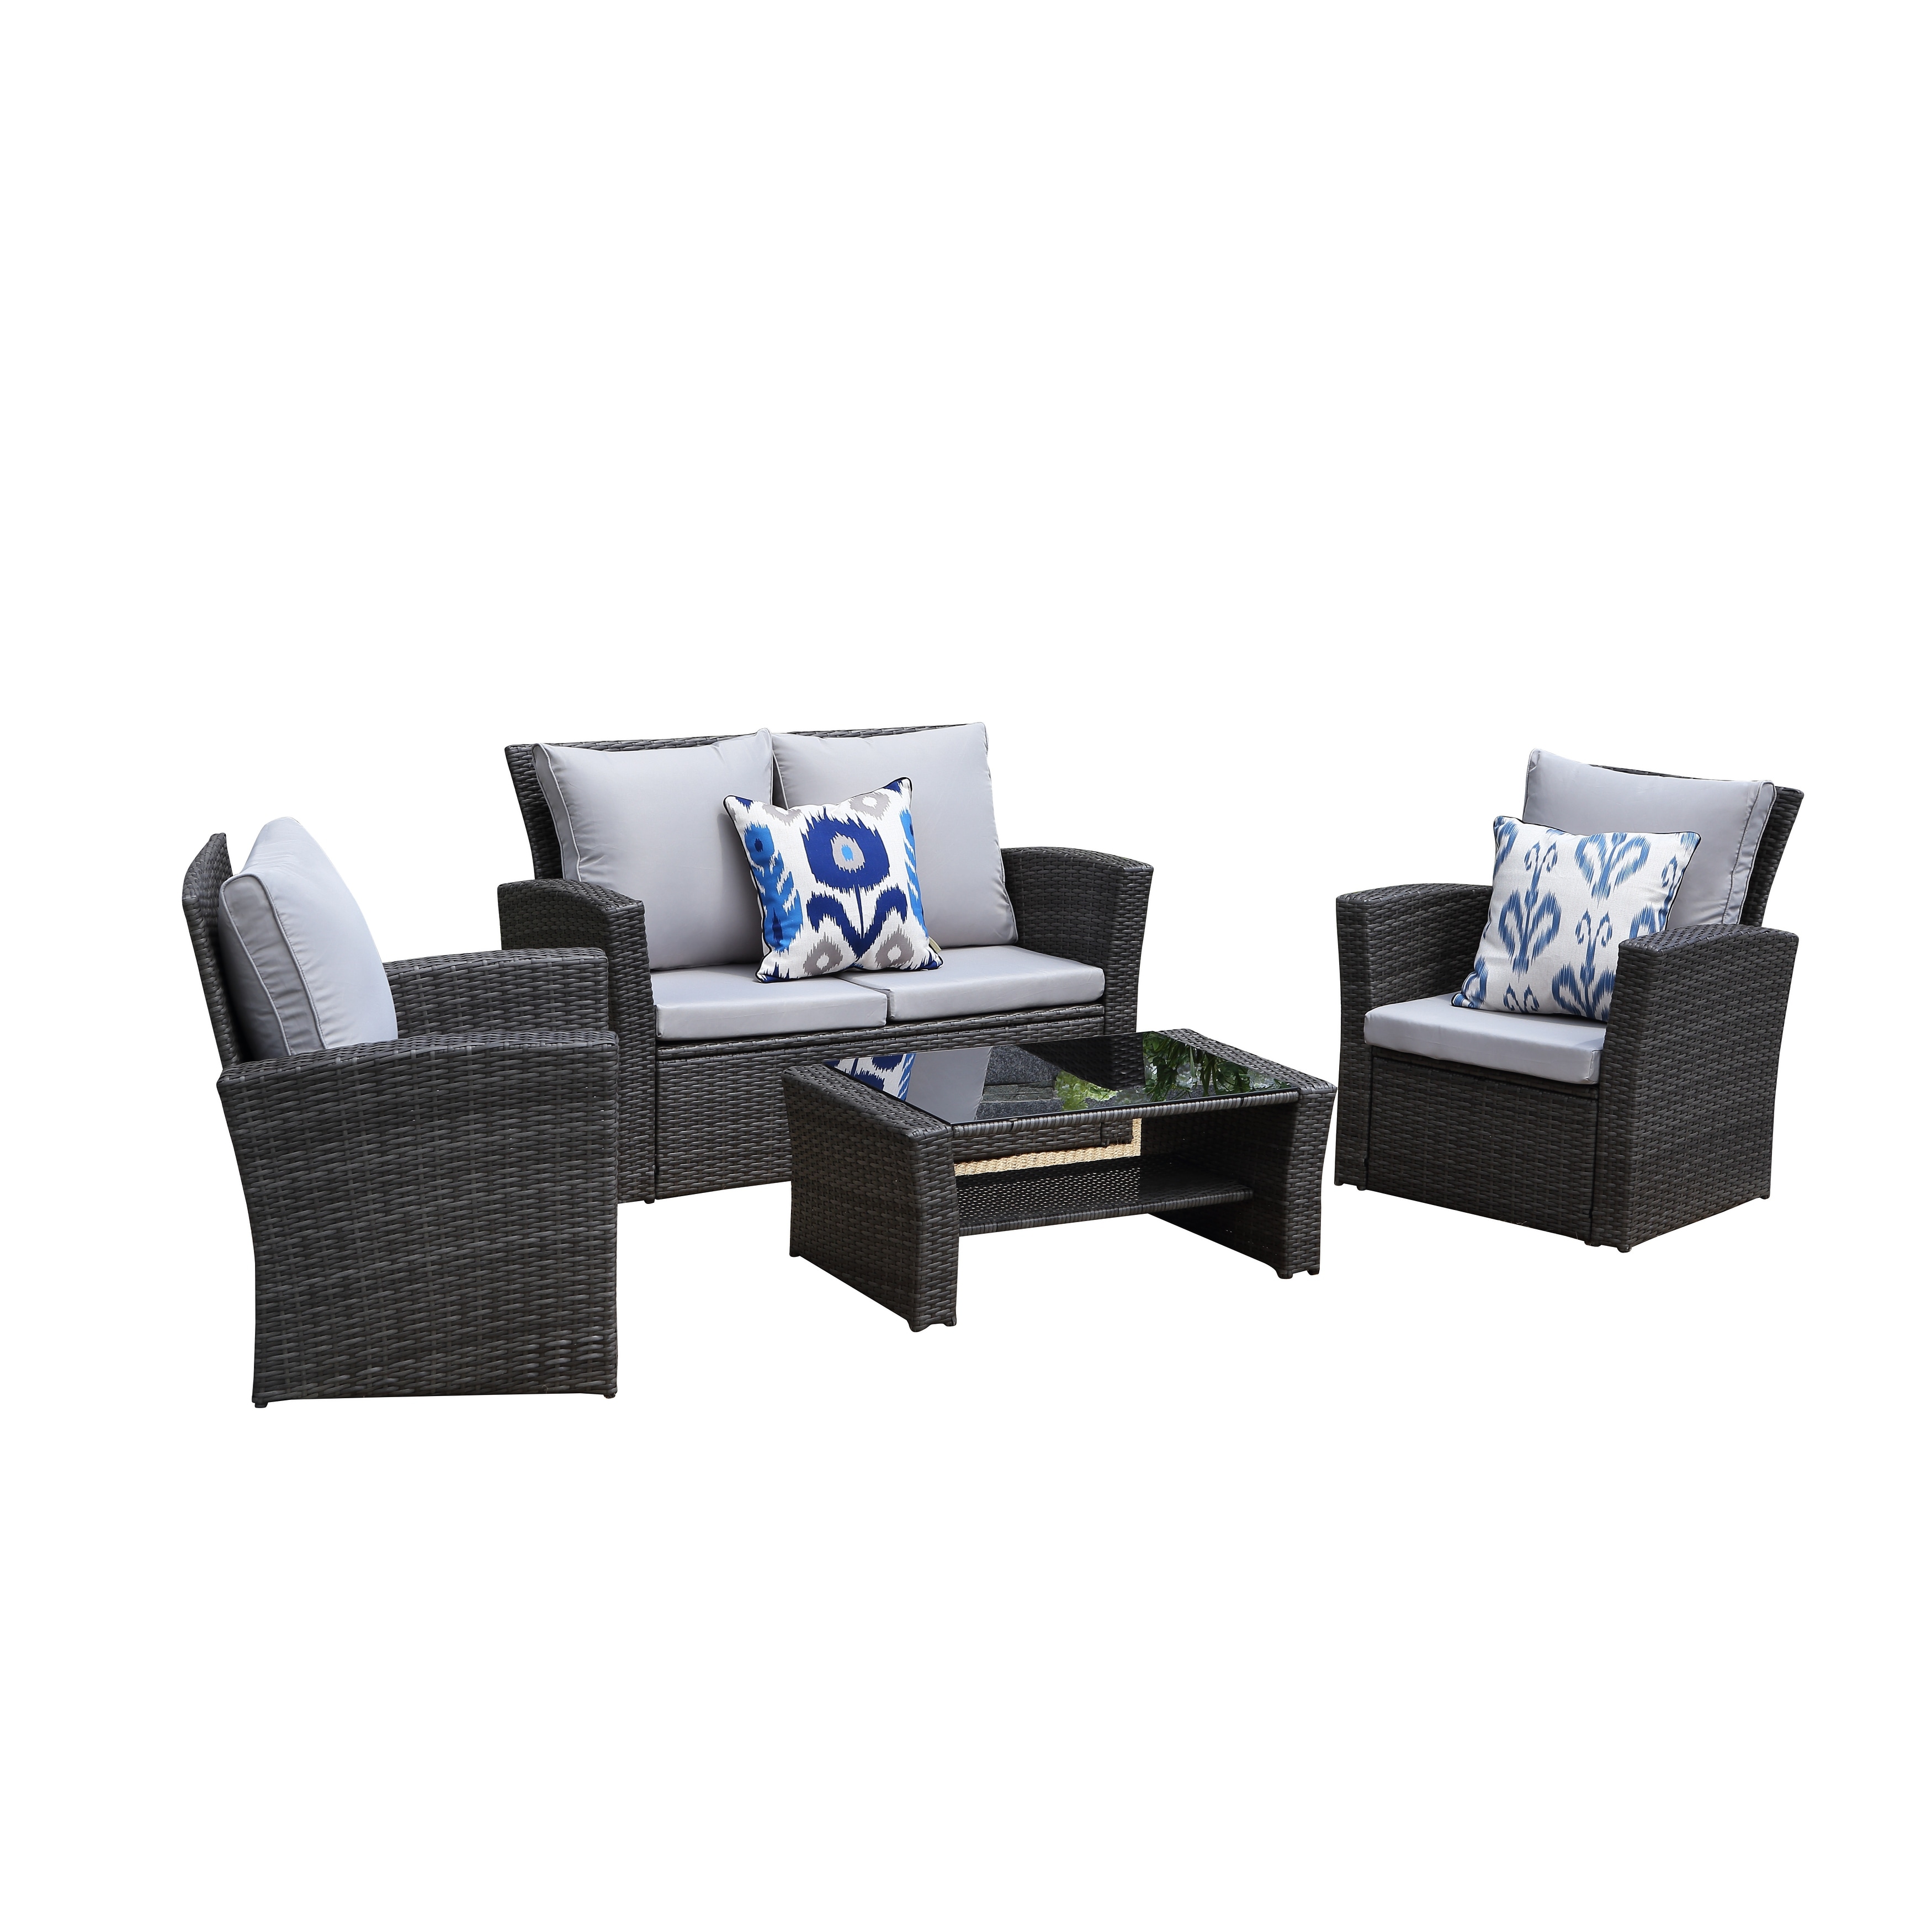 4-piece Outdoor Wicker Patio Conversation Ergonomic Furniture Set